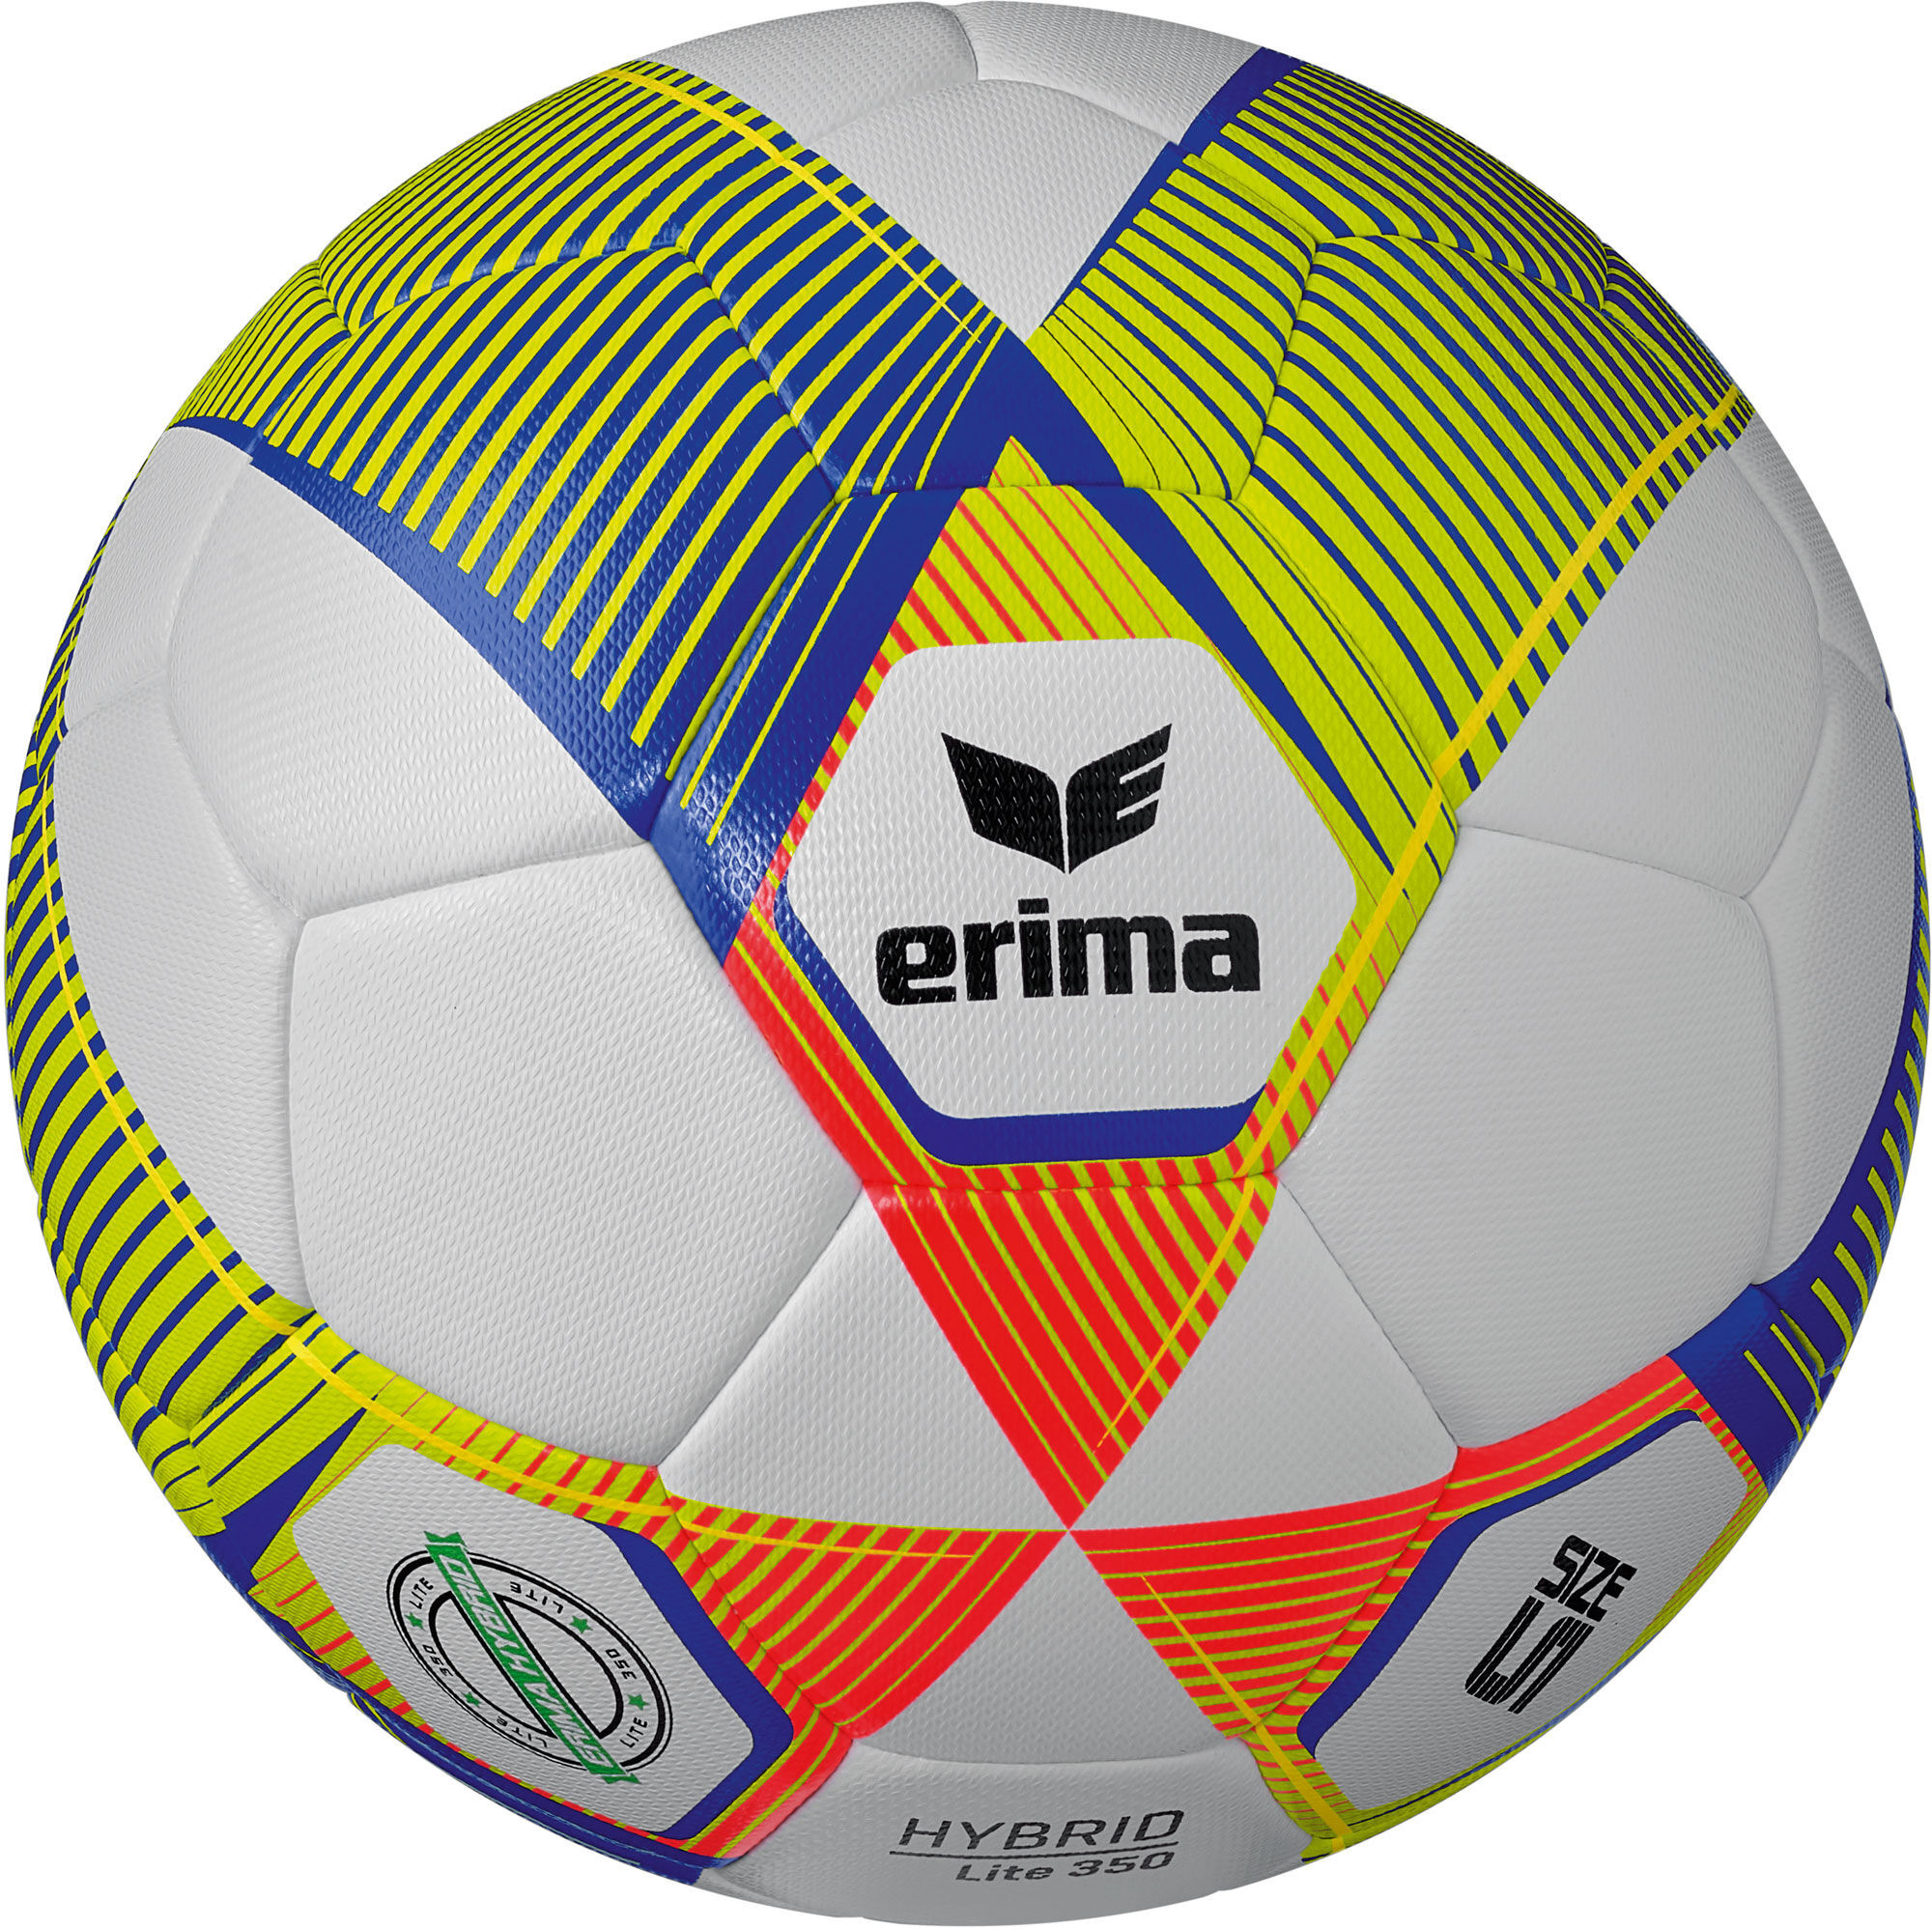 Labda Erima Erima Hybrid Lite 350g Trainings ball